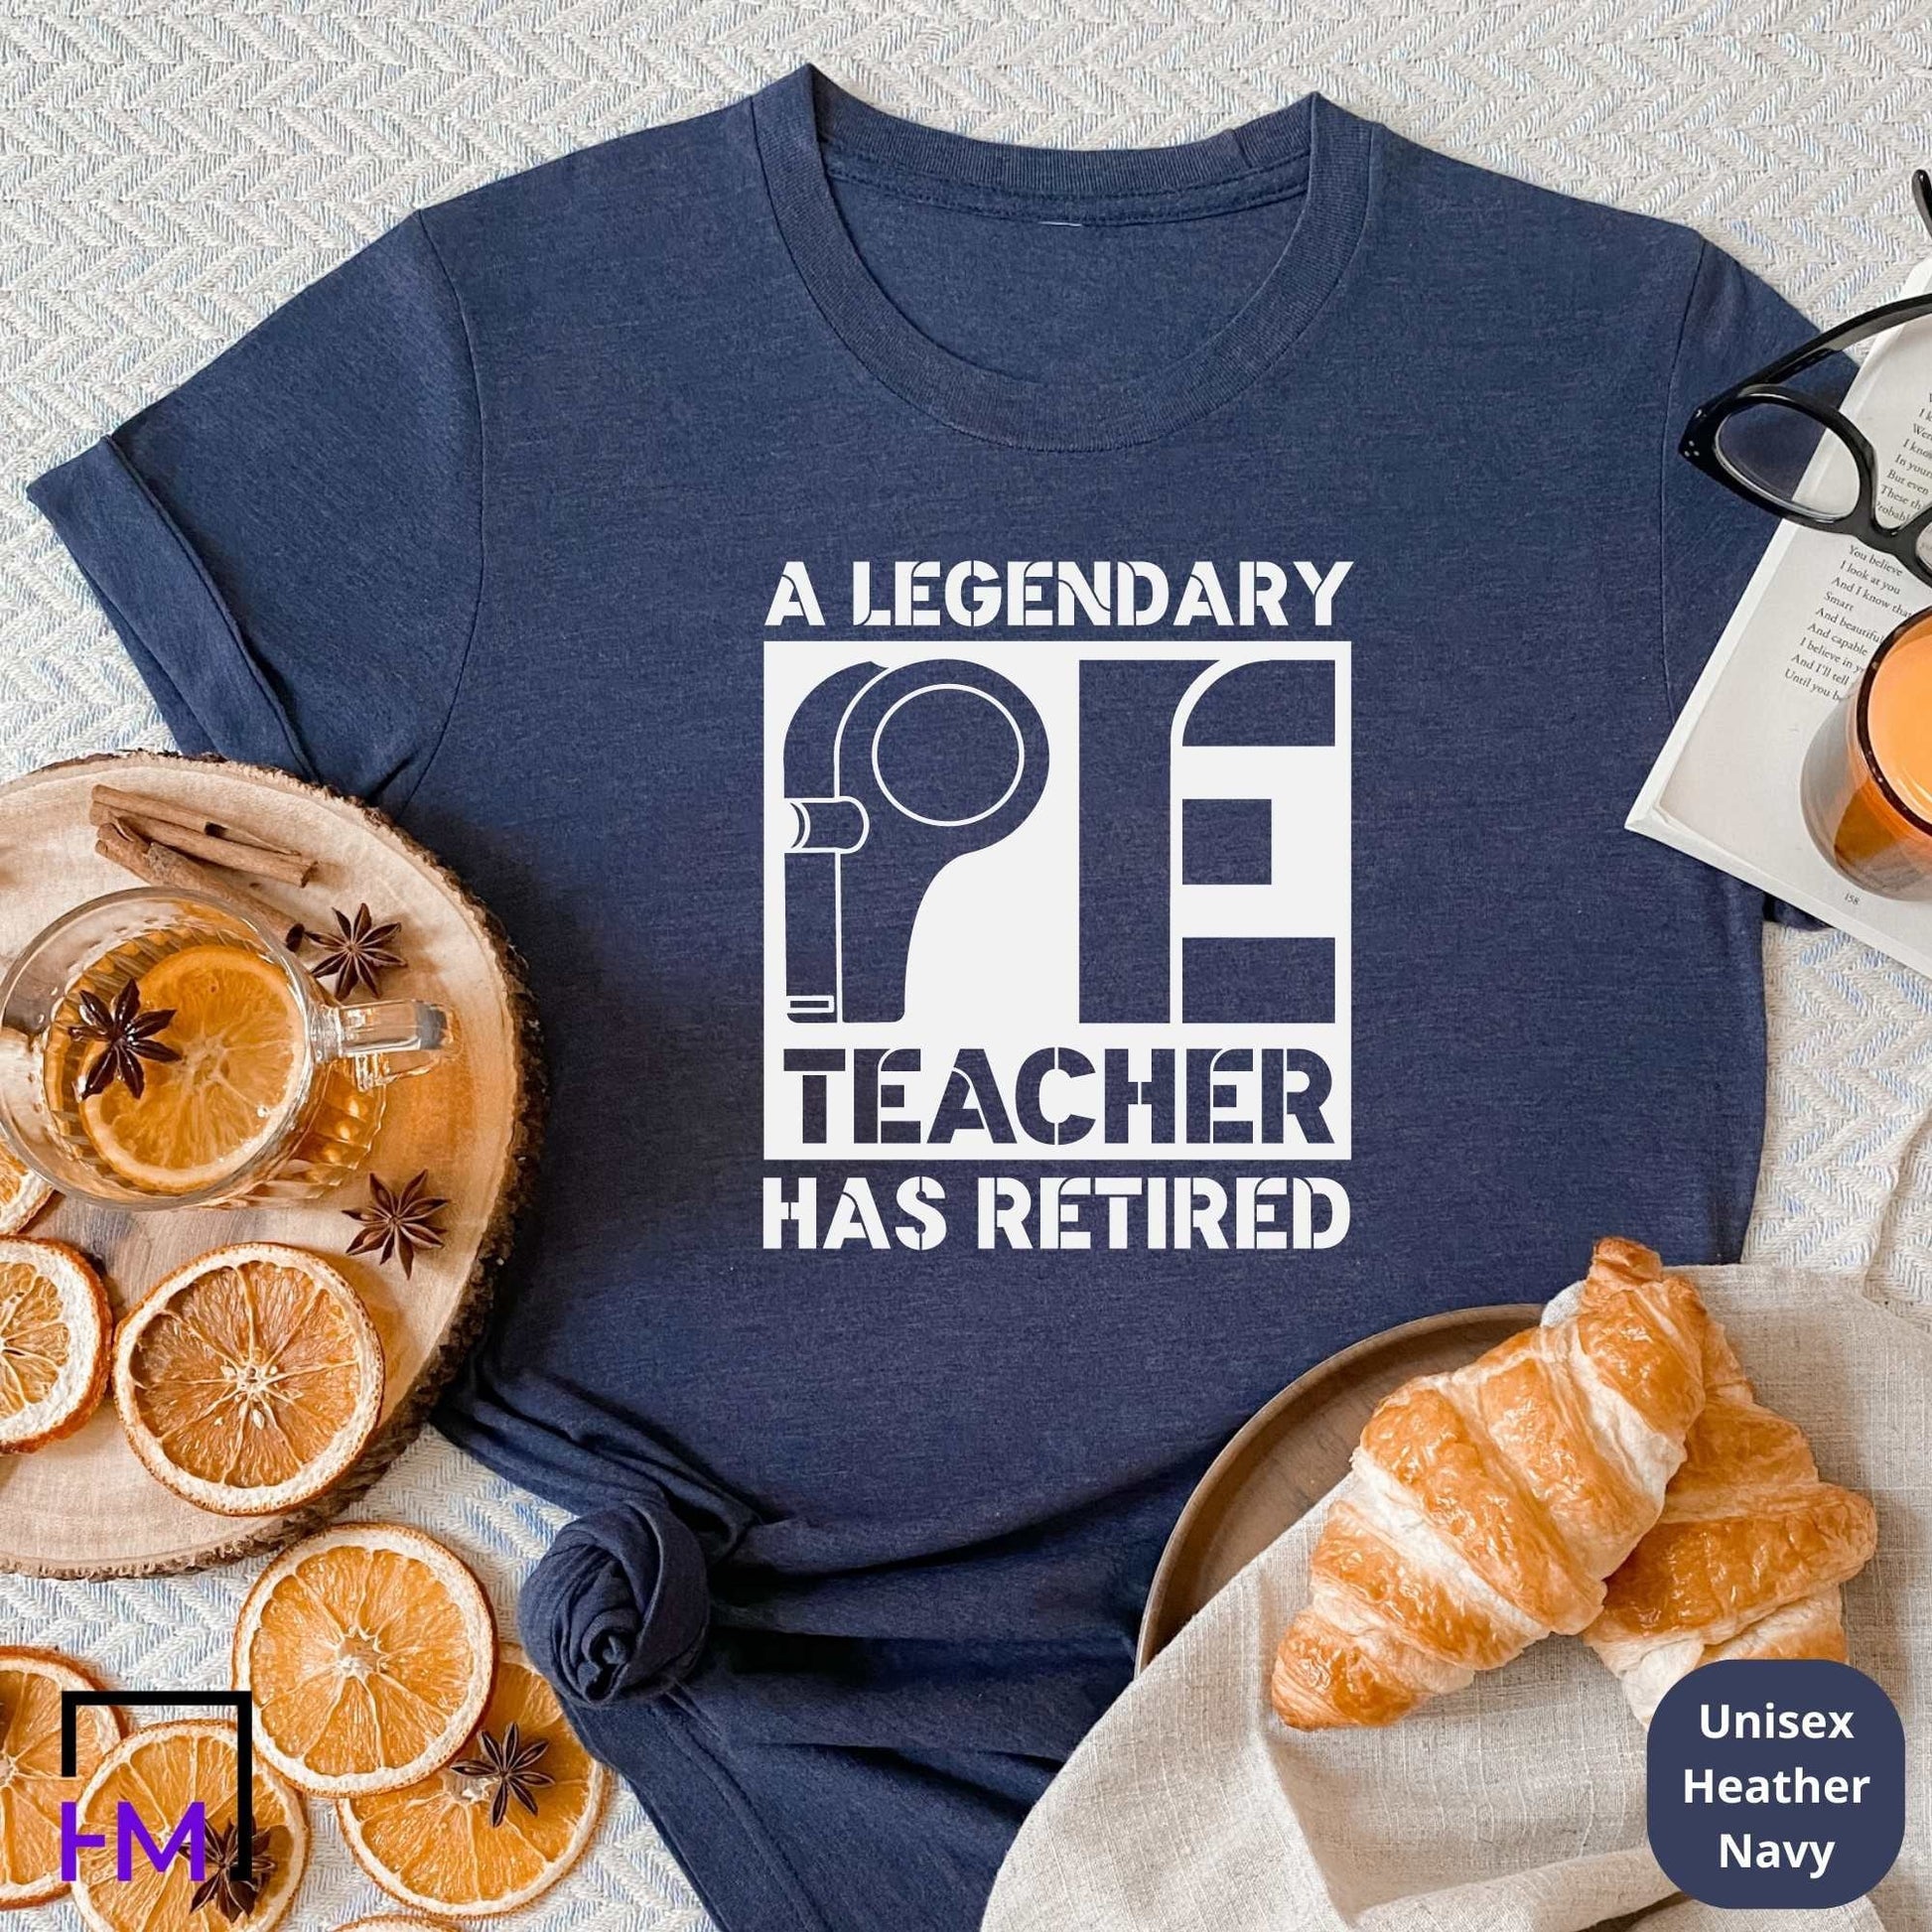 Retired Physical Education Teacher Shirt, PE Gift, PE Teacher Shirt, Teacher Gift, Physical Education Teacher Gift Shirt, School Coach Gift HMDesignStudioUS